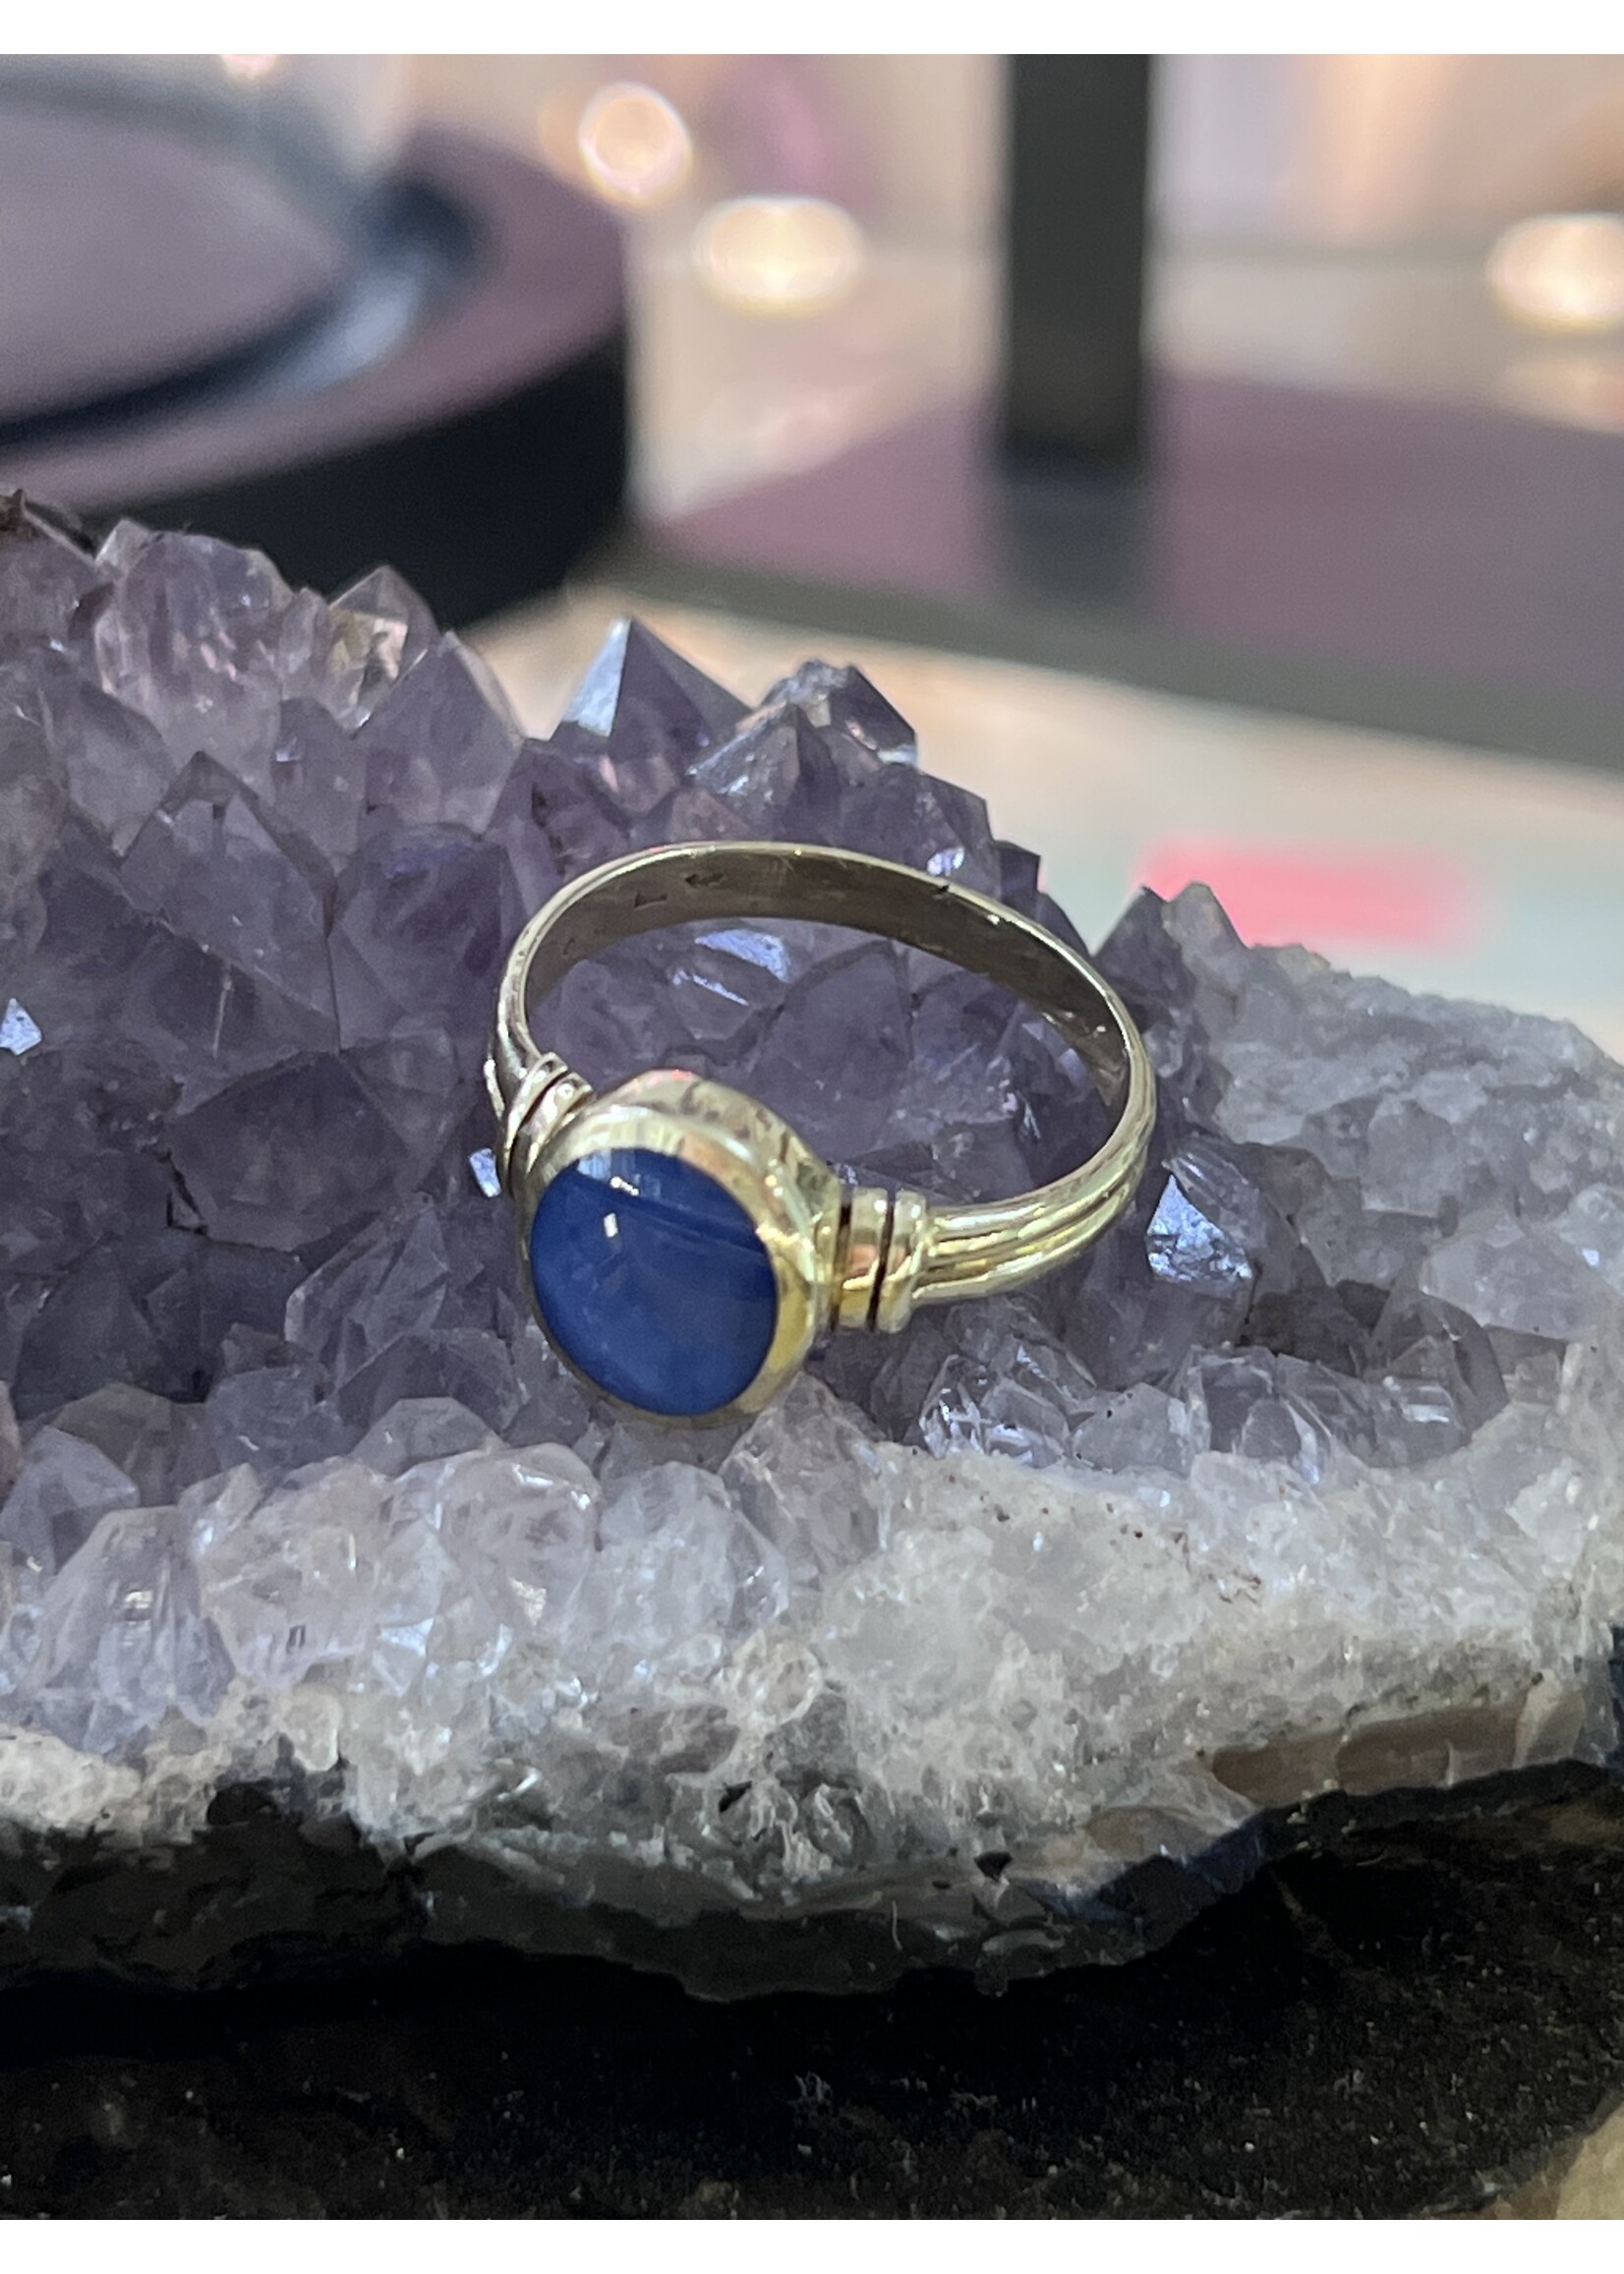 Vintage & Occasion Occasion 14kt gouden ring met blauw stersaffier